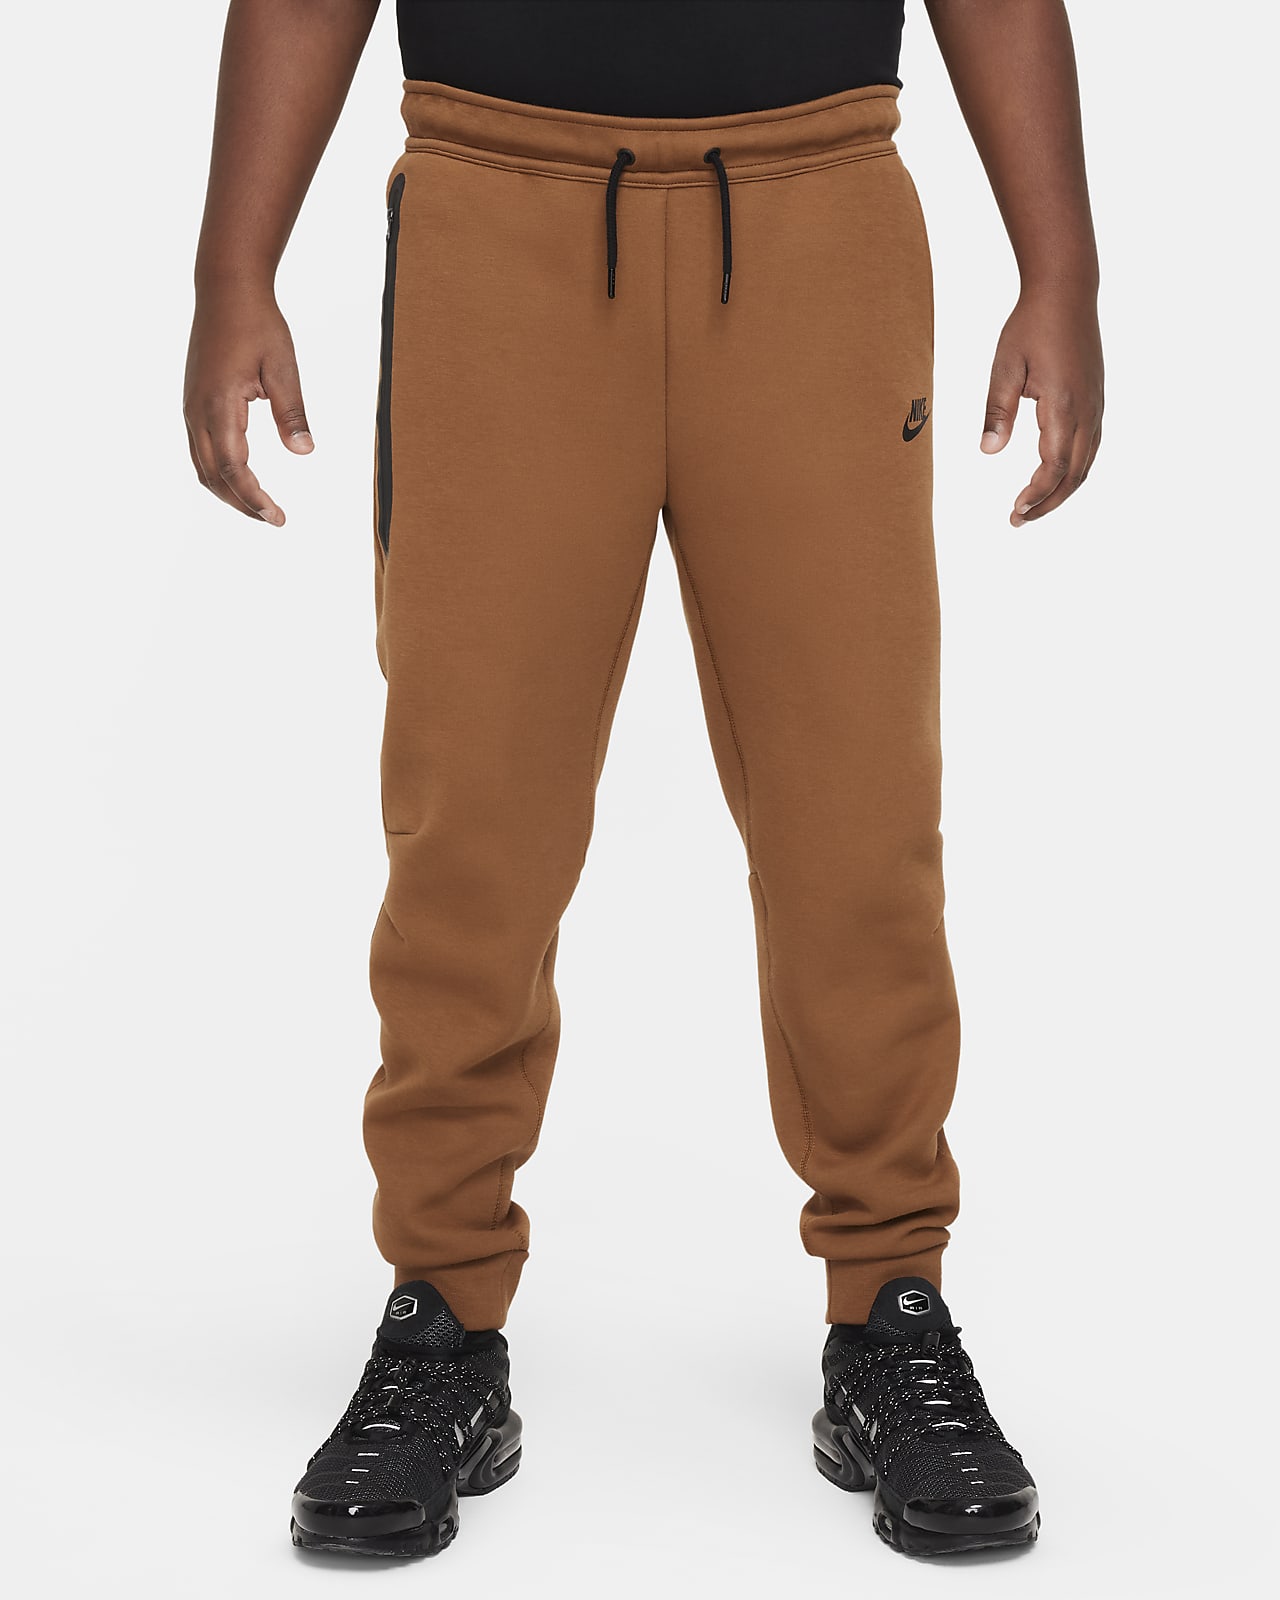 Nike Sportswear TECH PANT - Tracksuit bottoms - anthracite/black